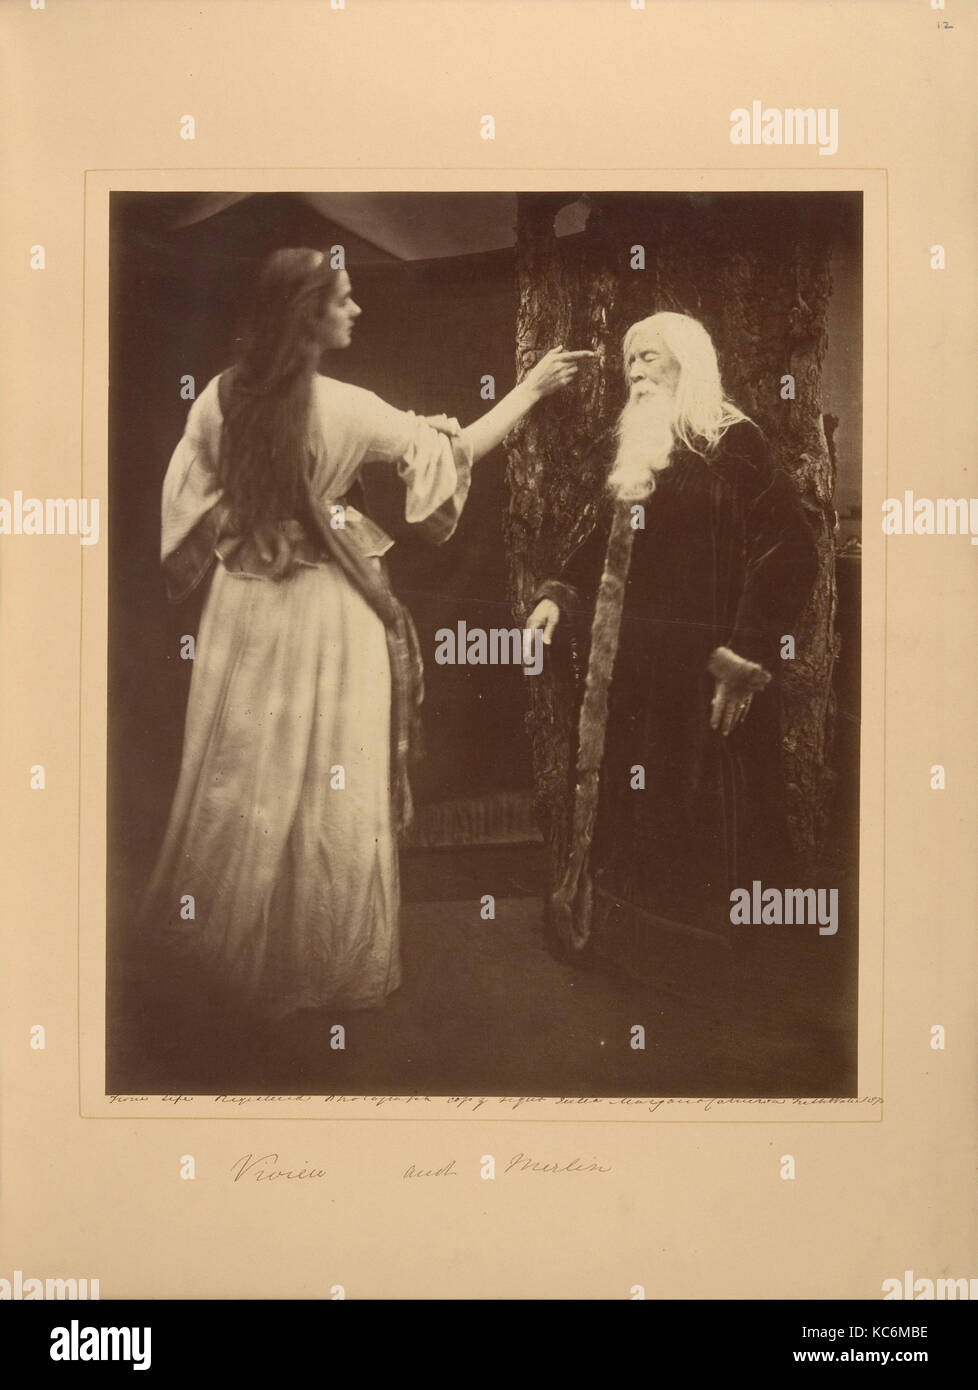 Vivien e Merlin, 1874, albume silver stampa dal vetro negativo, 30.4 x 25.3 cm (11 15/16 x 9 15/16 in. ), Fotografie, Julia Foto Stock